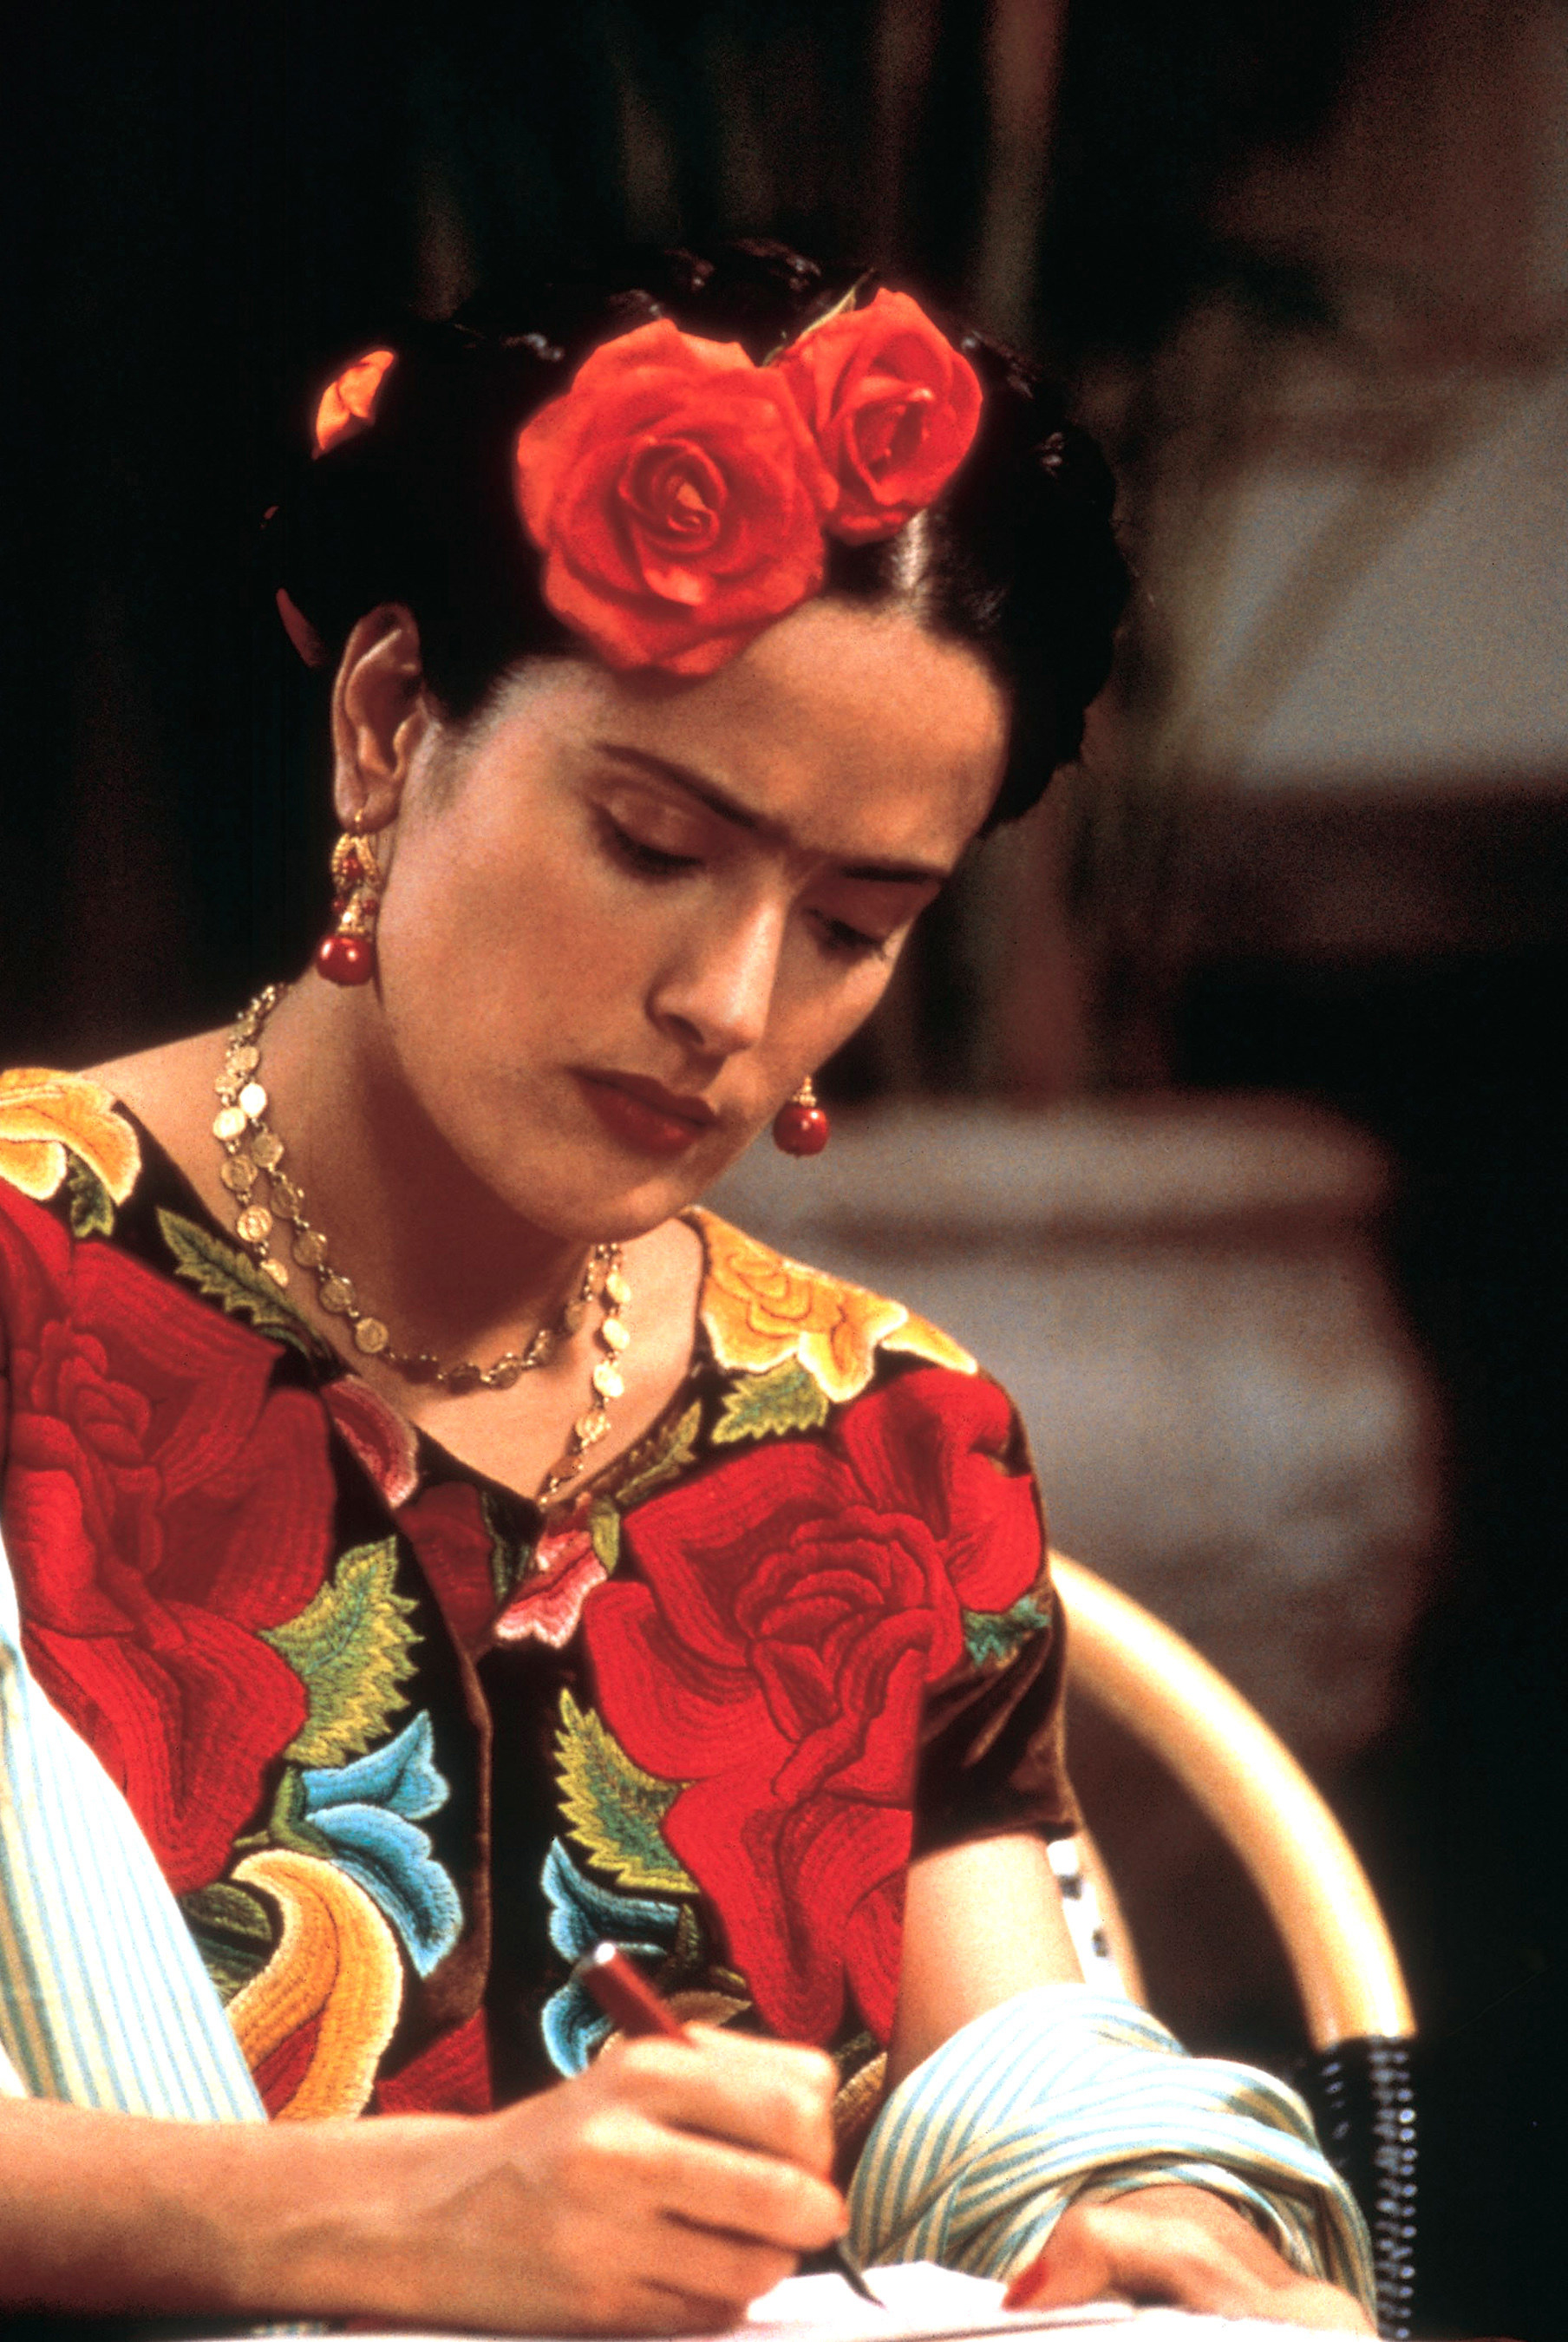 Salma in costume as Frida